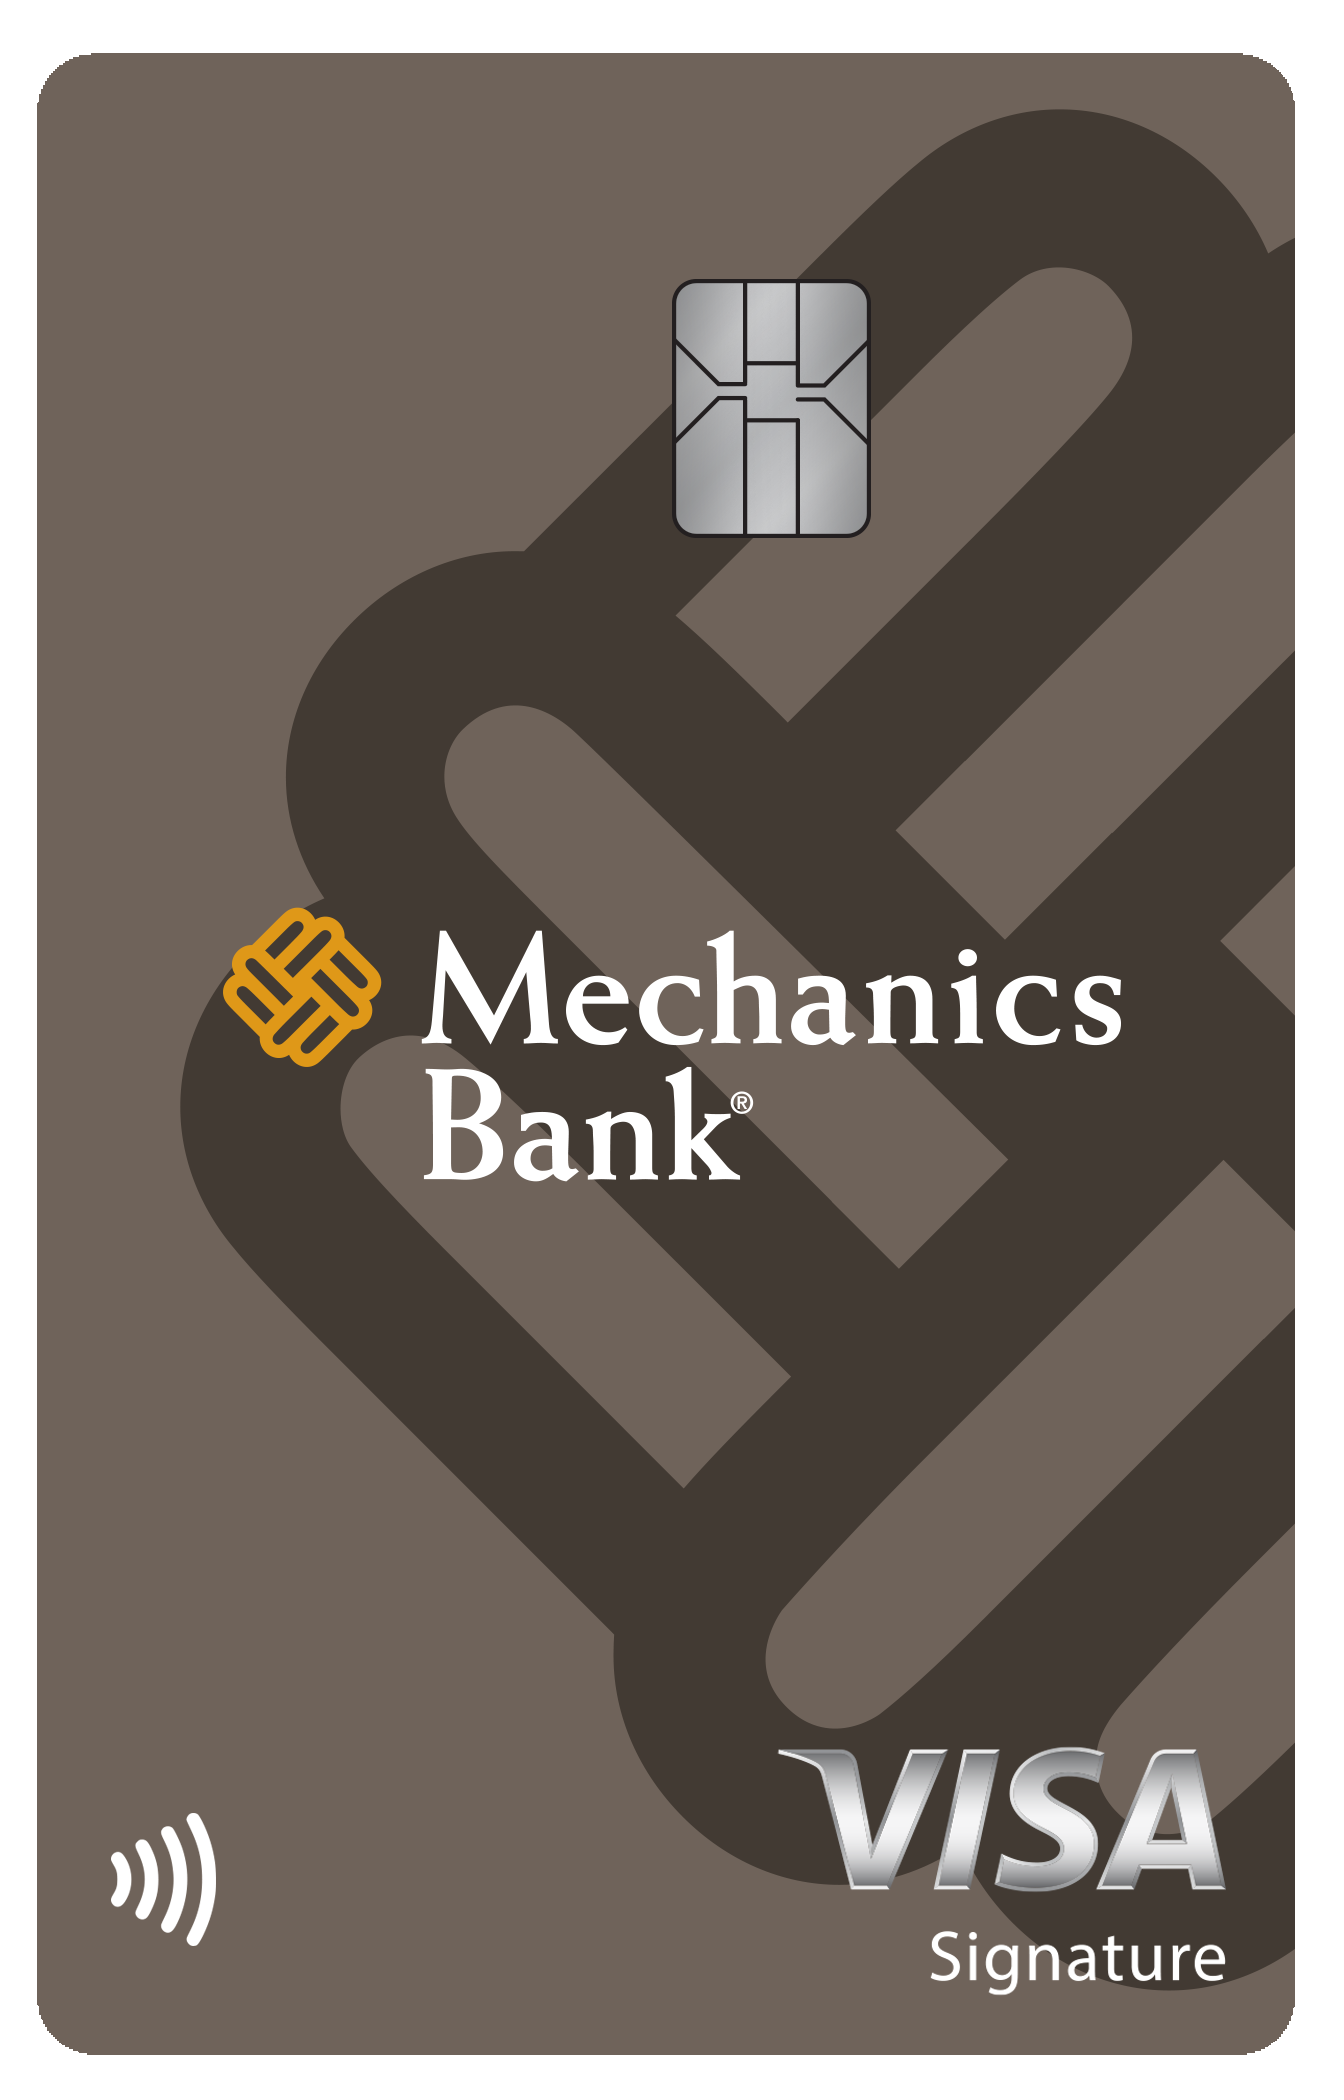 Mechanics Bank Travel Rewards+ Card